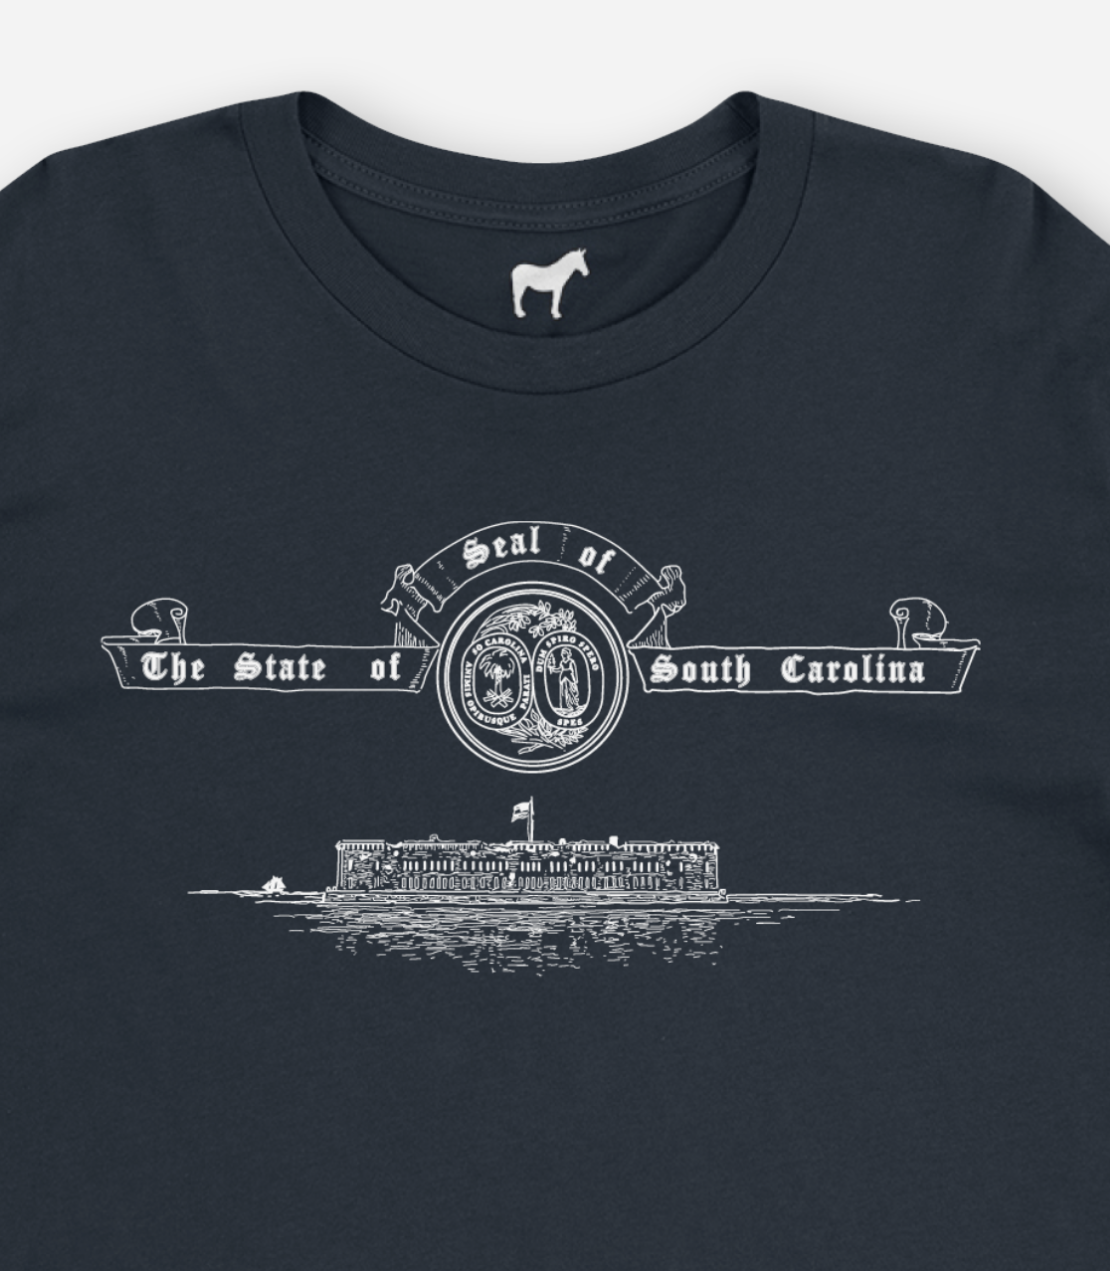 South Carolina and Fort Sumter Shirt